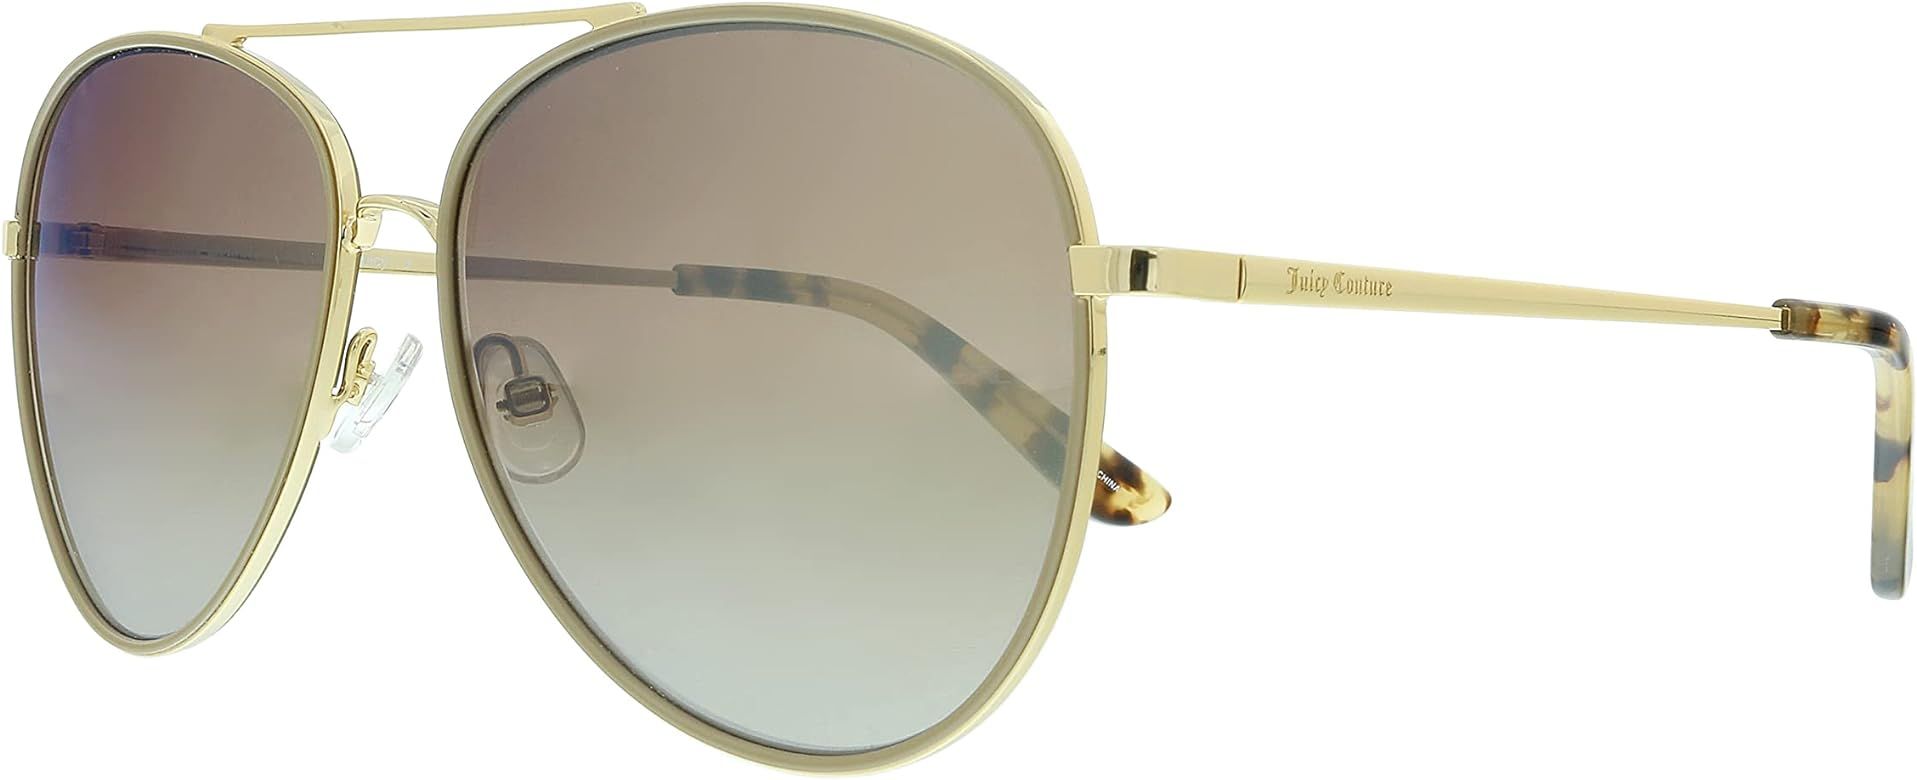 Sunglasses Juicy Couture 599 /S 084E Gold Beige/Nq Brown Mirror Gradient | Amazon (US)